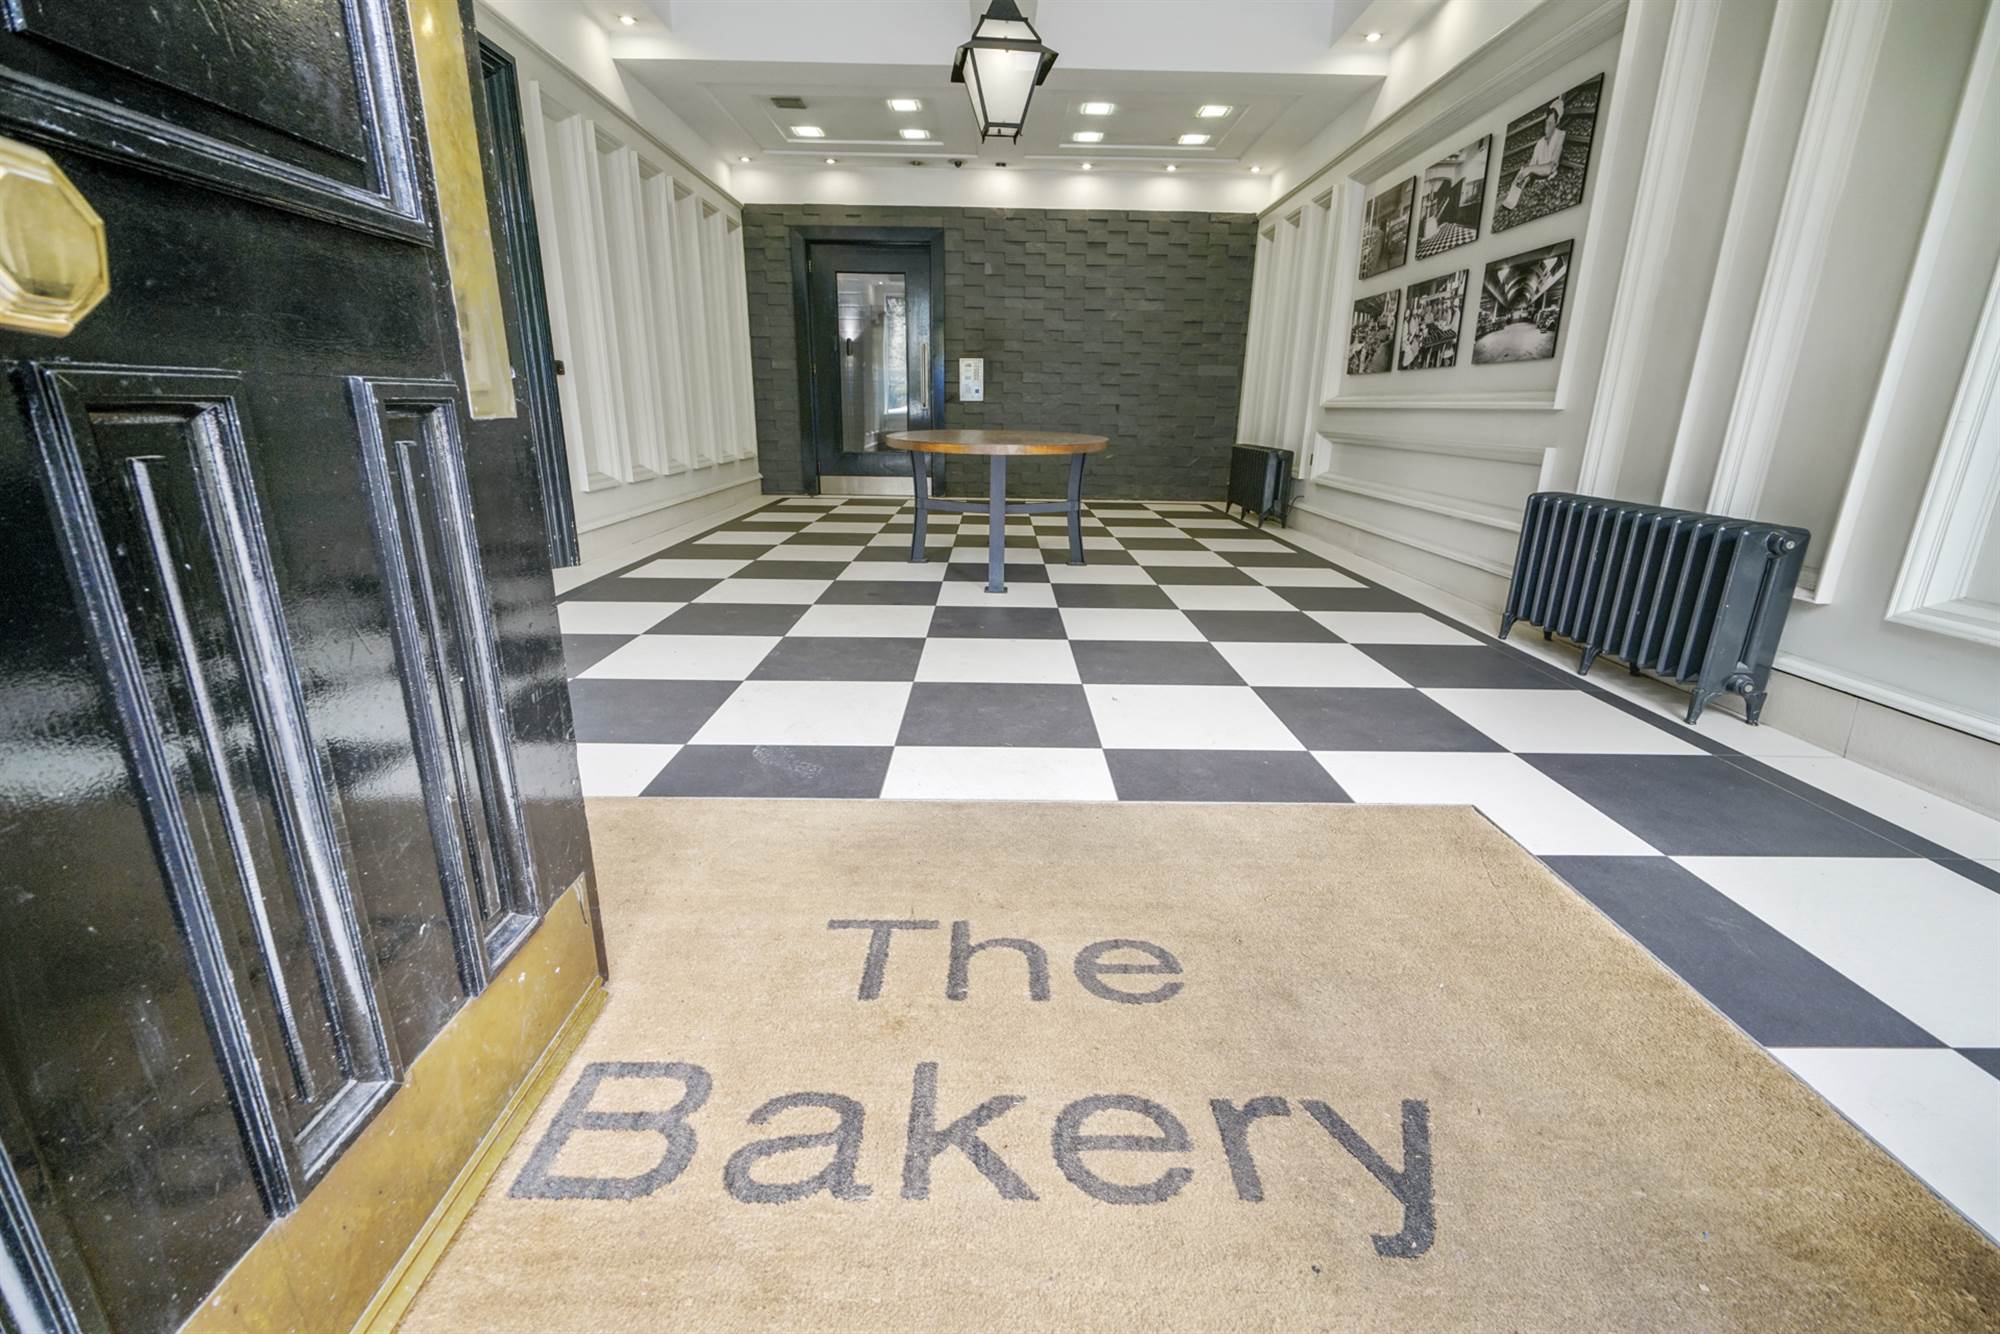 408 The Bakery